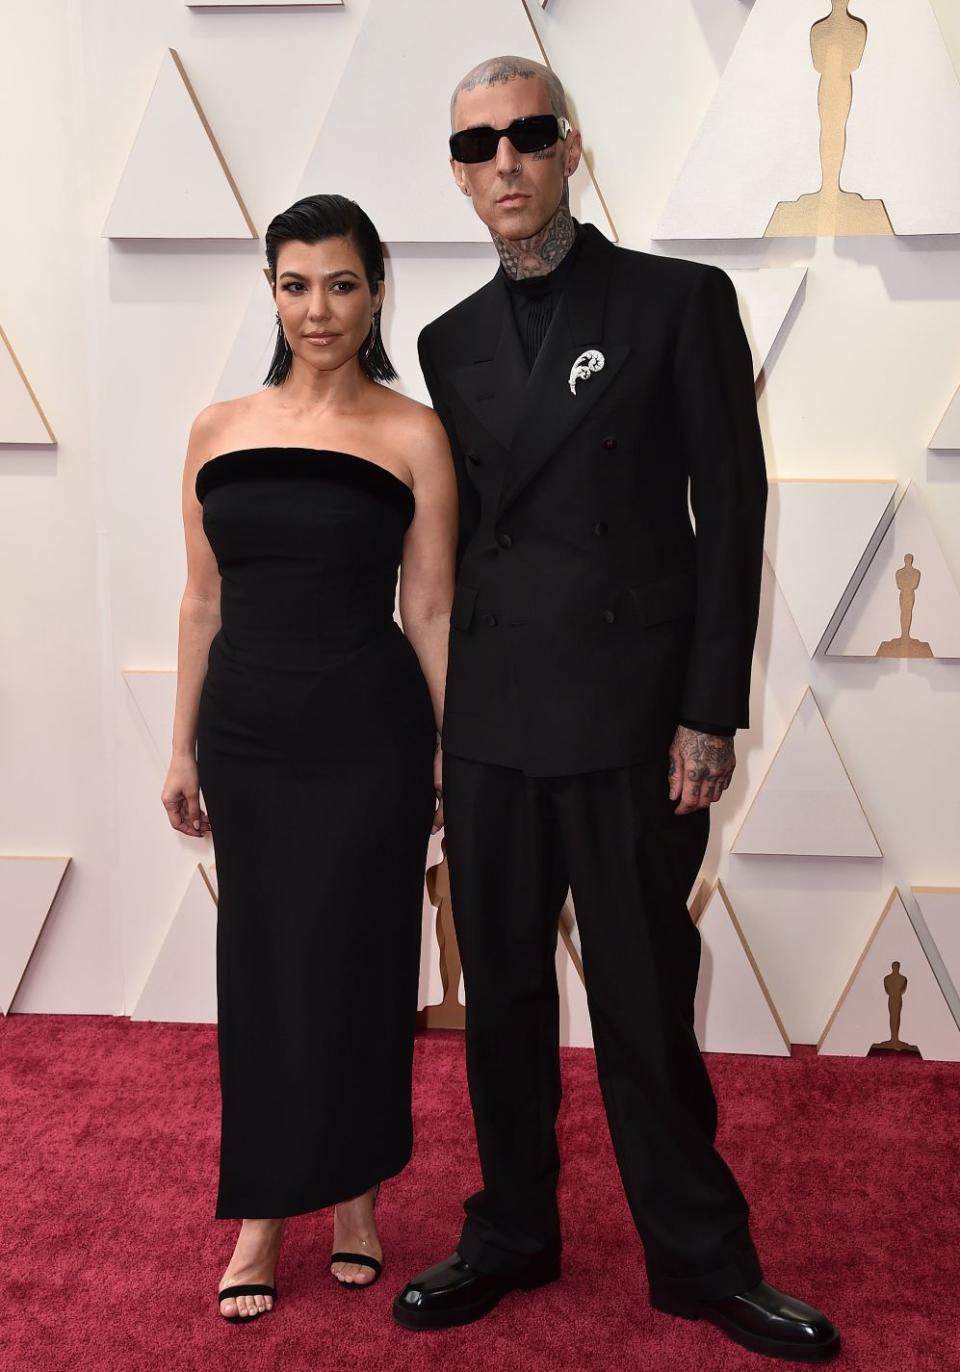 Kourtney Kardashian and Travis Barker at the 2022 Oscar red carpet. - Credit: AP